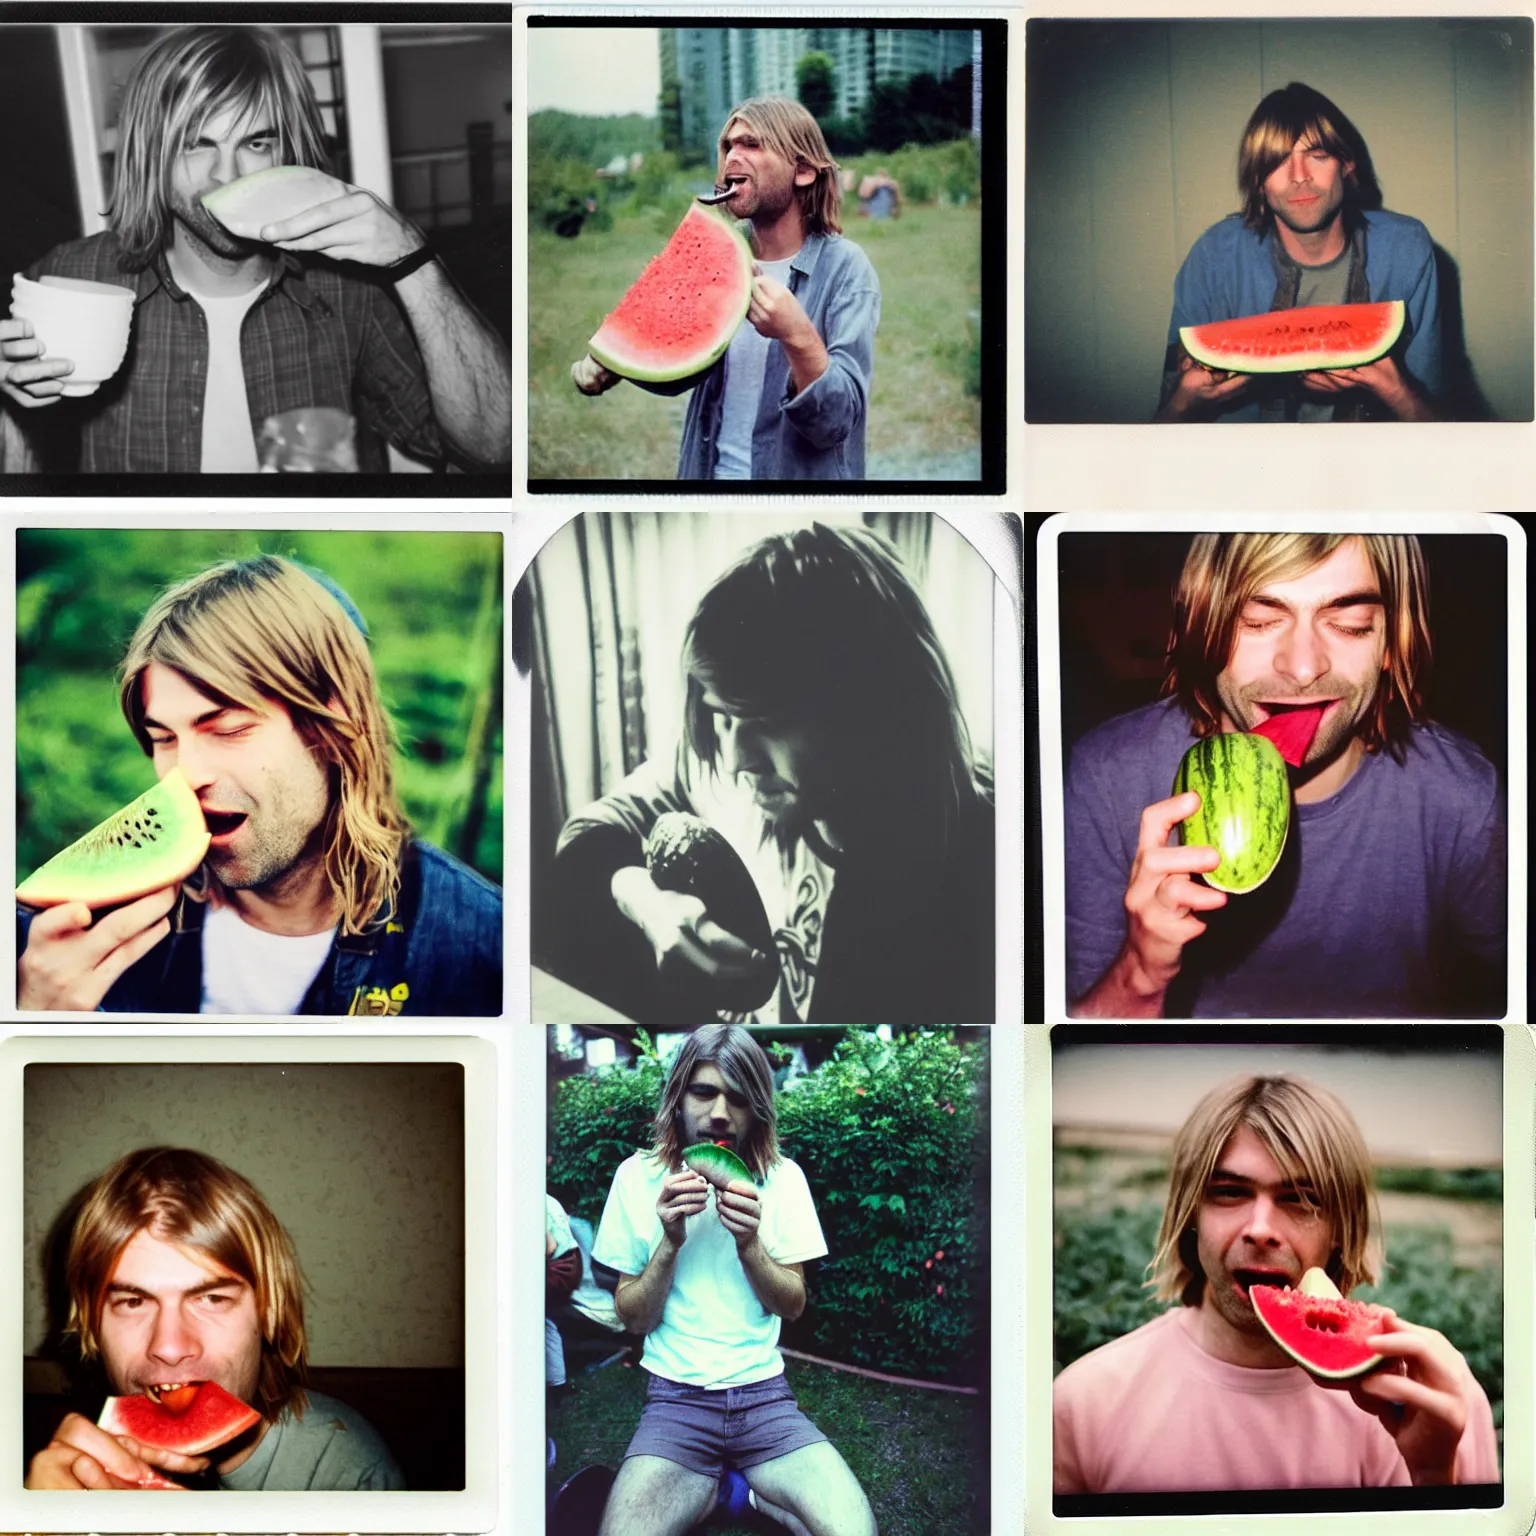 Prompt: a polaroid photograph of happy kurt cobain eating watermelon in tokio